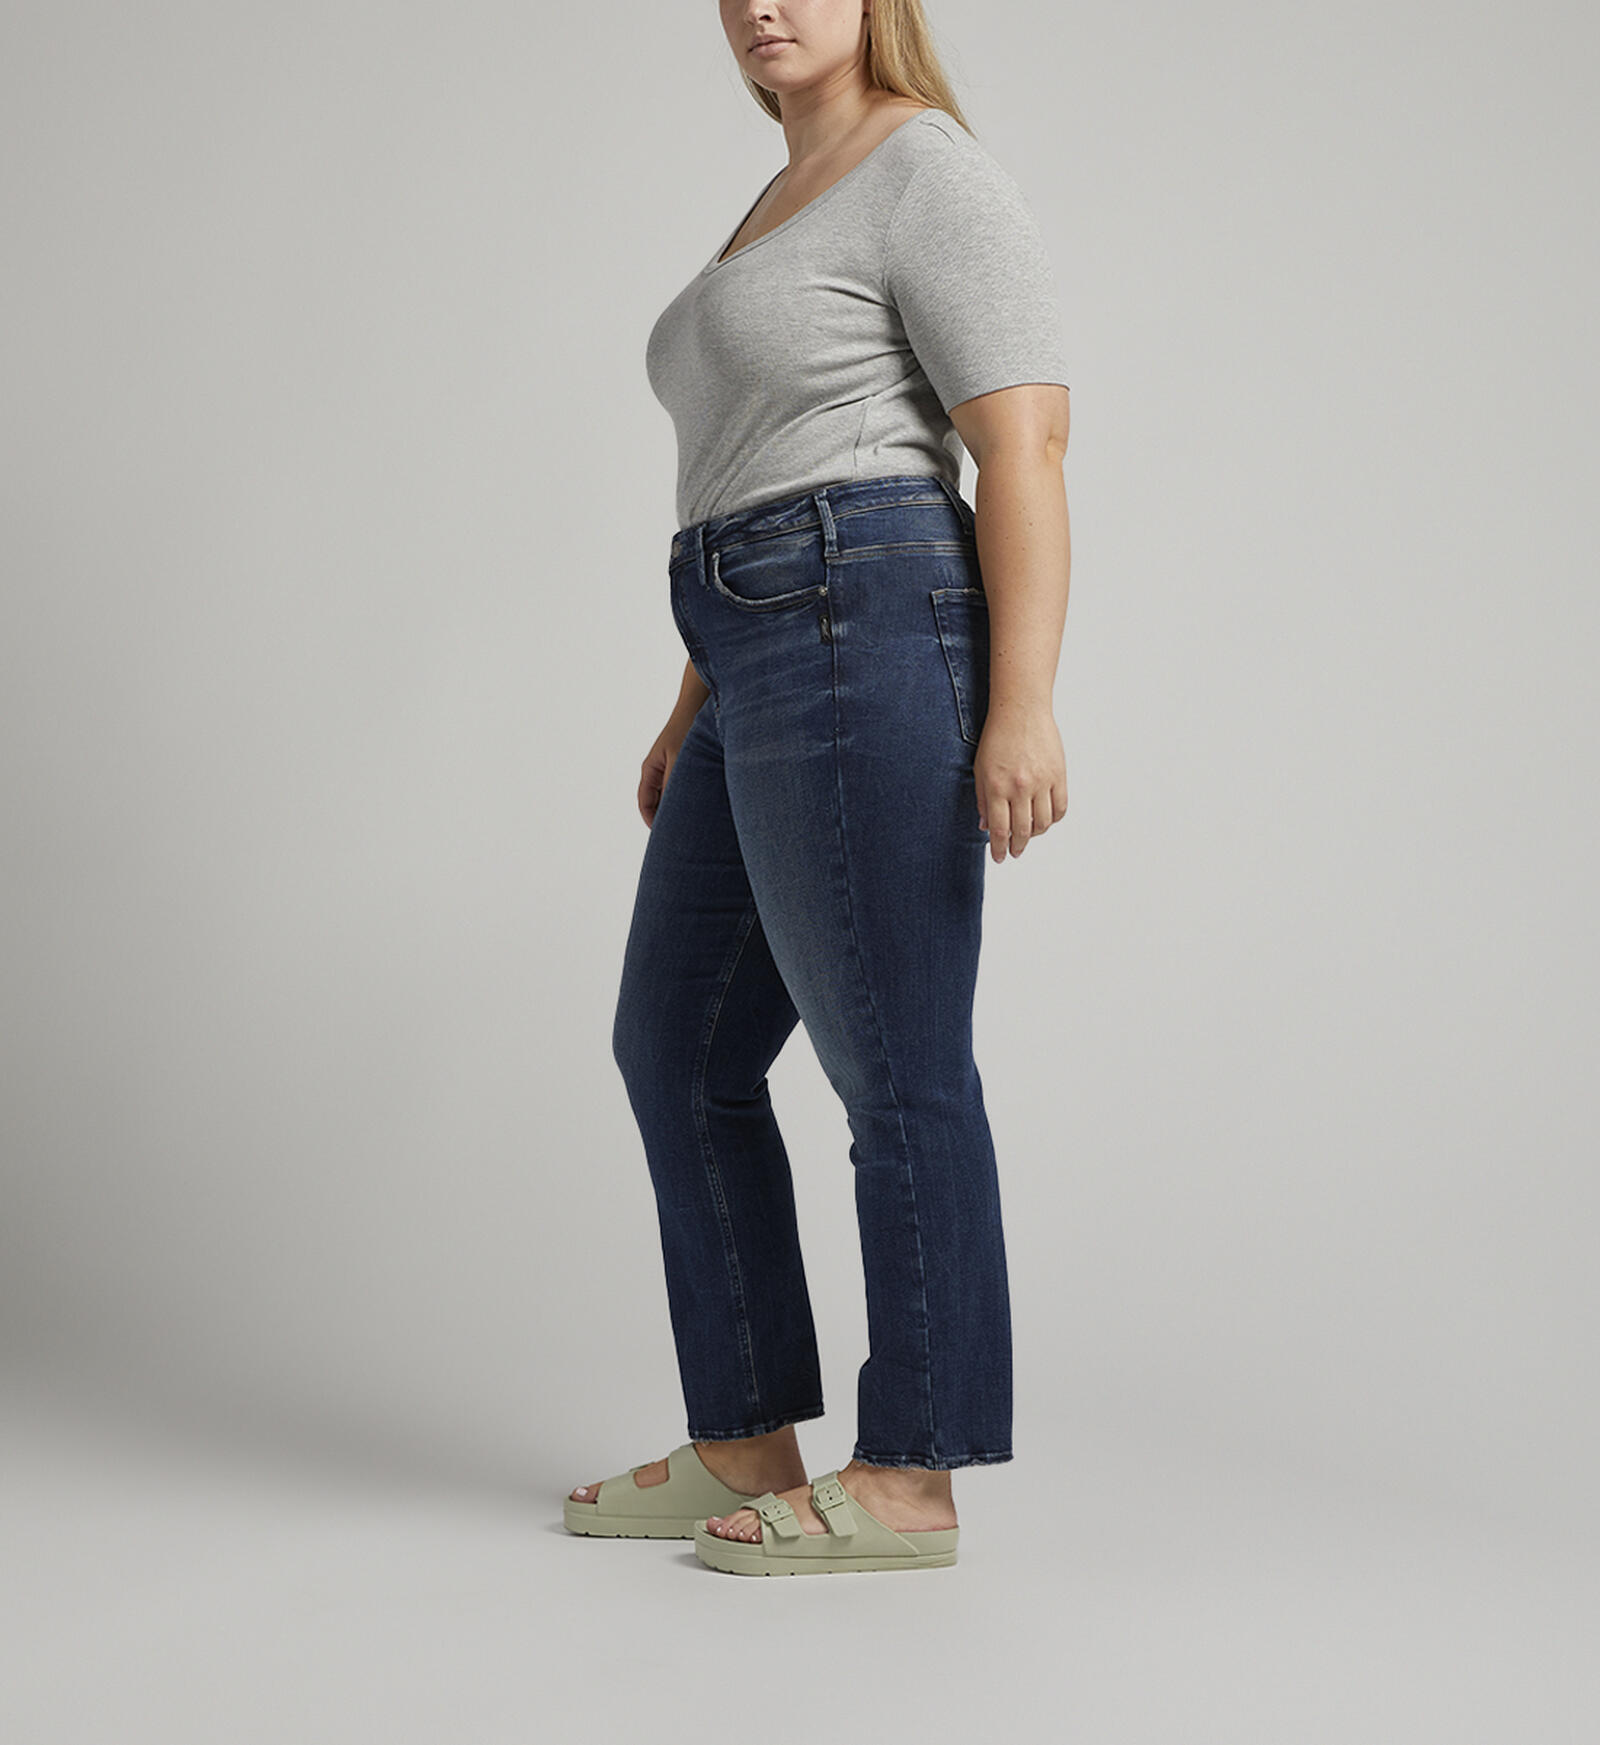 Plus Size Skinny Jean High Rise Distressed Denim Slim Jeans